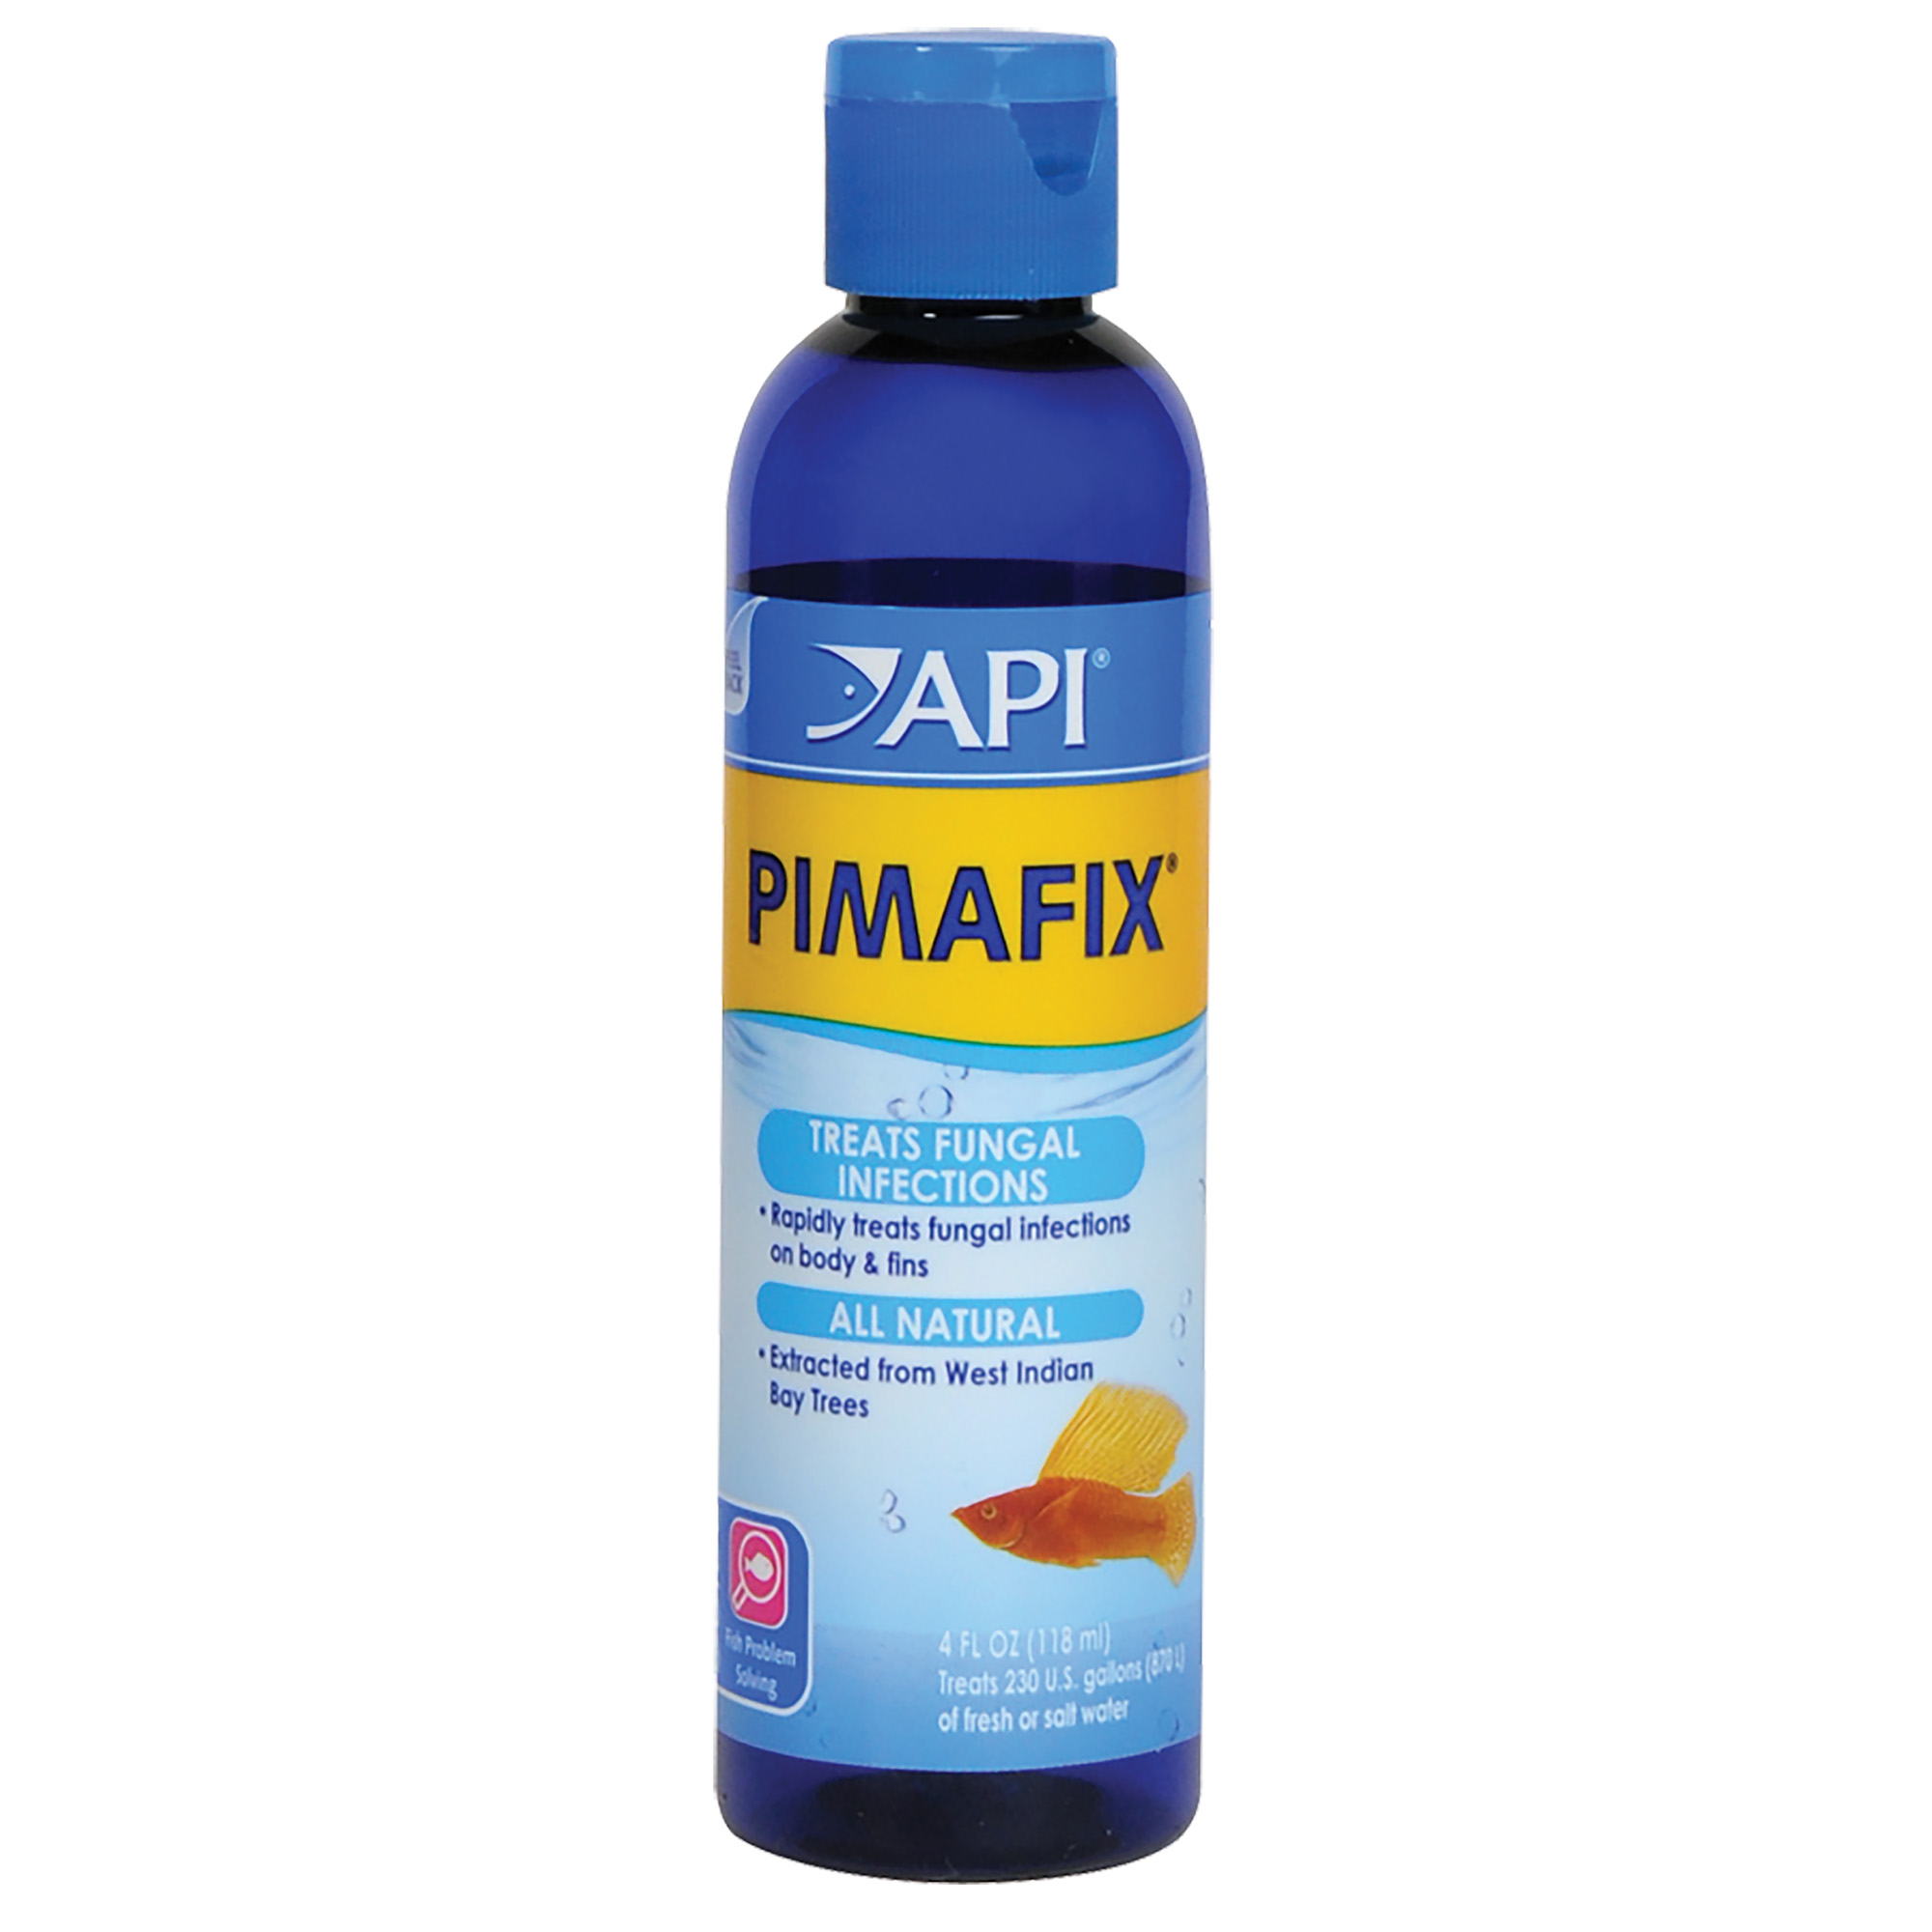 PIMAFIX™